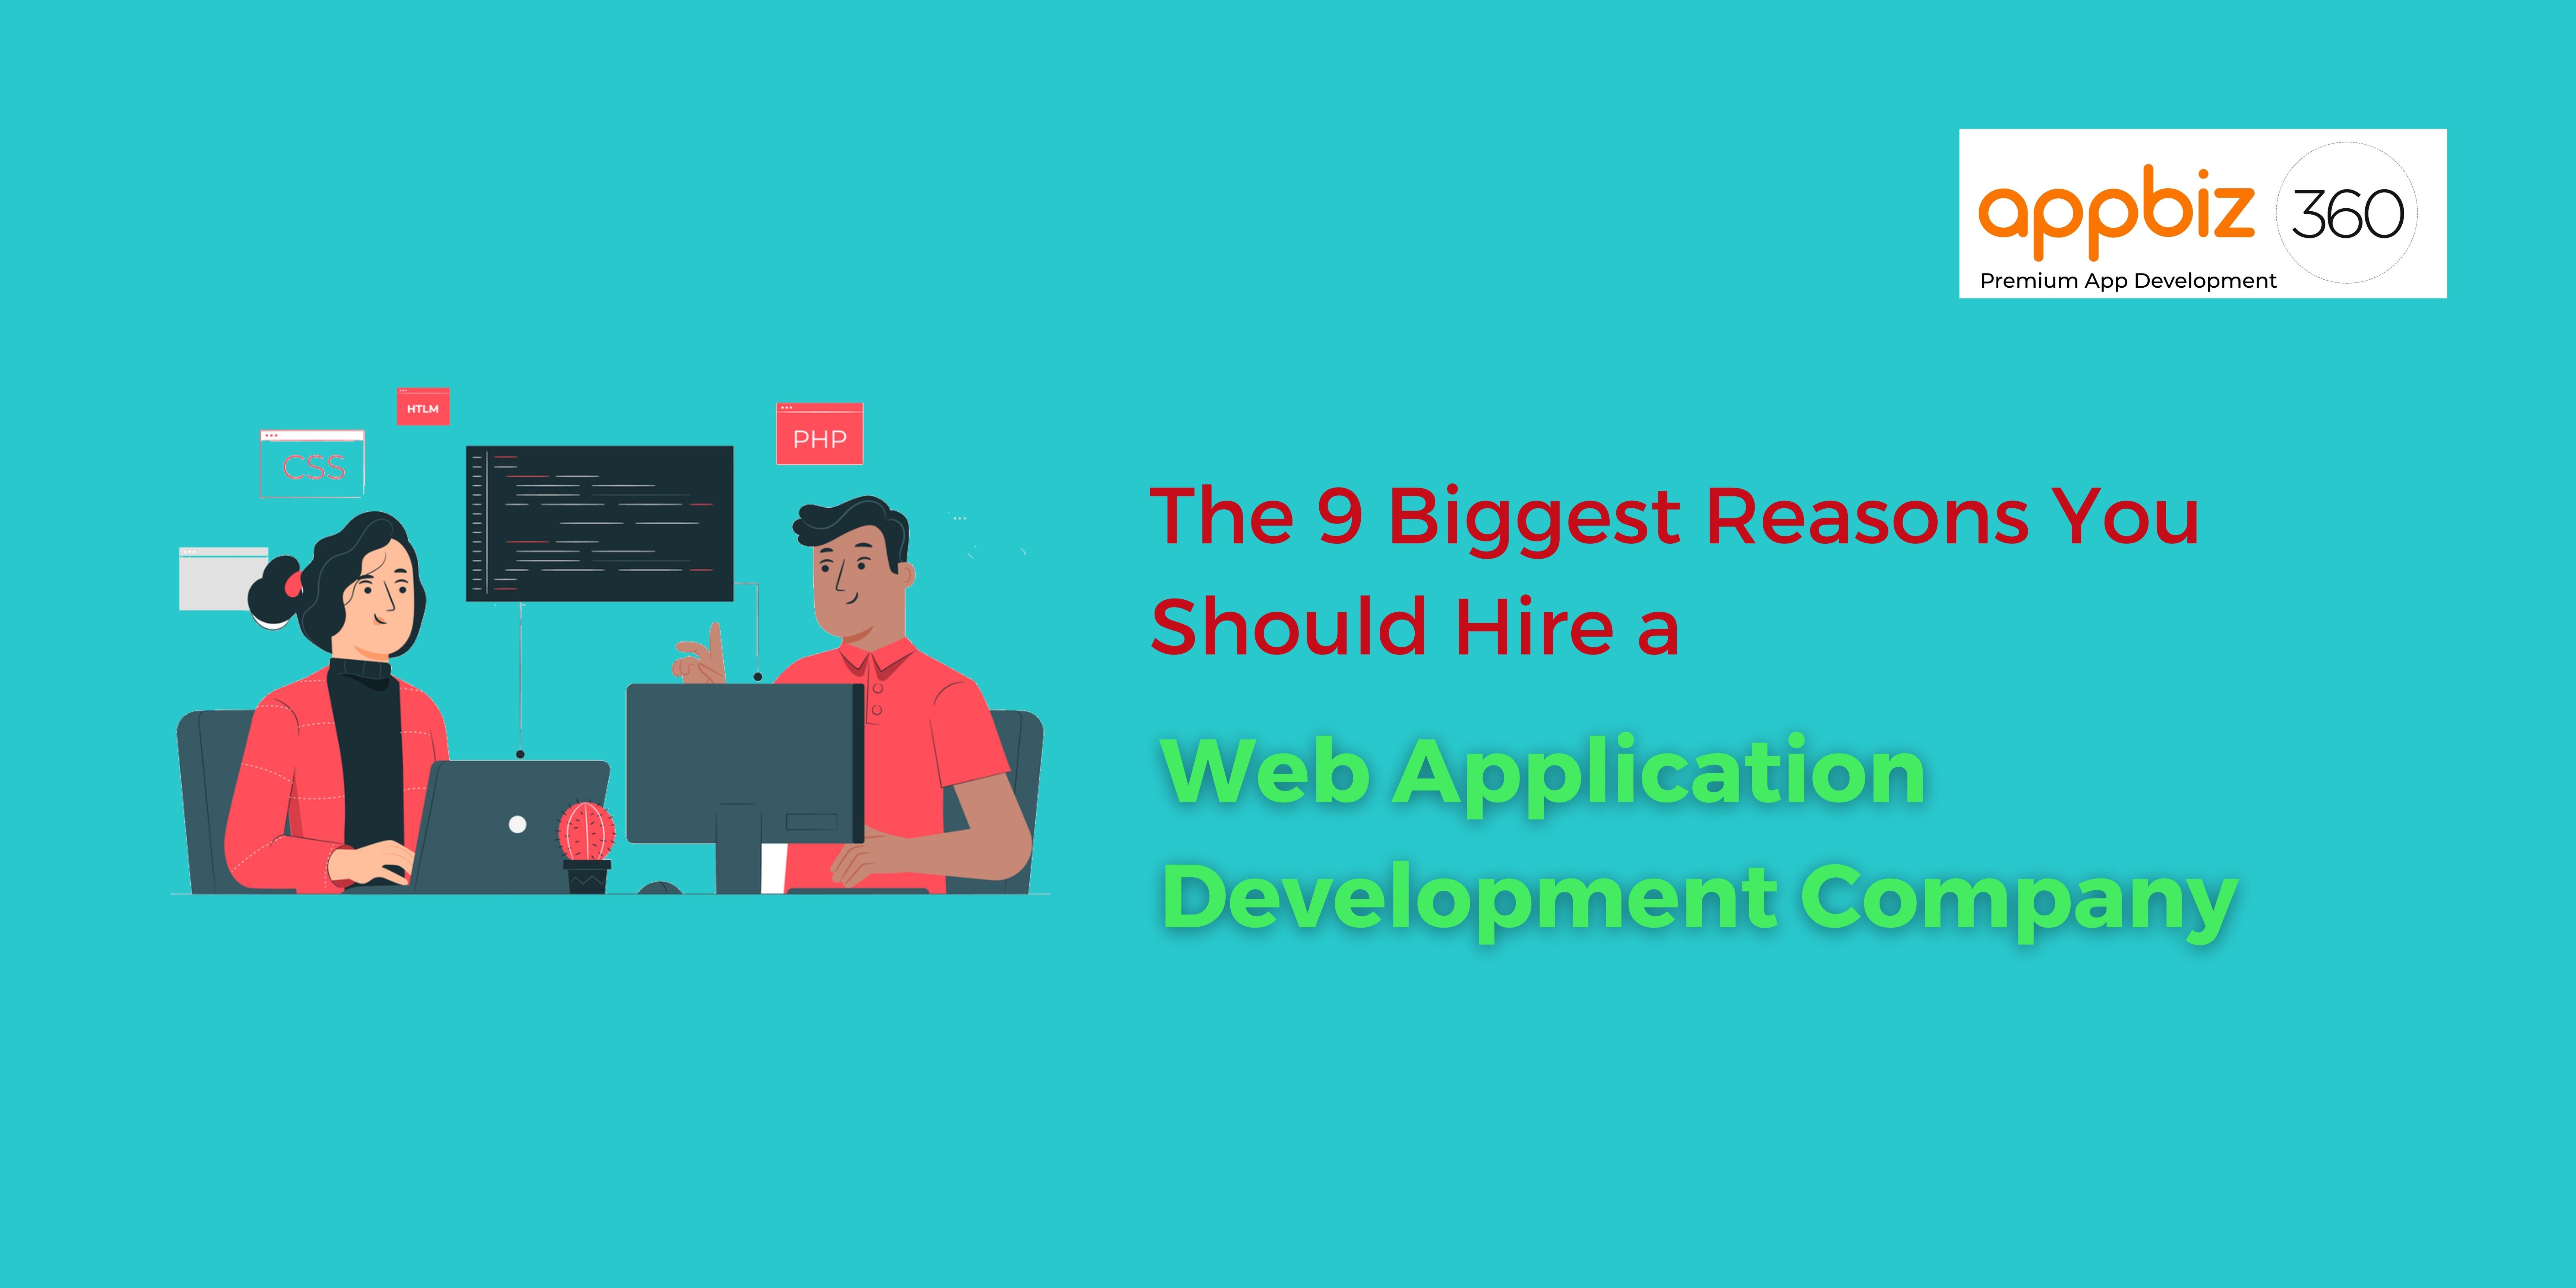 The 9 Biggest Reasons You Should Hire a Web Application Development Company